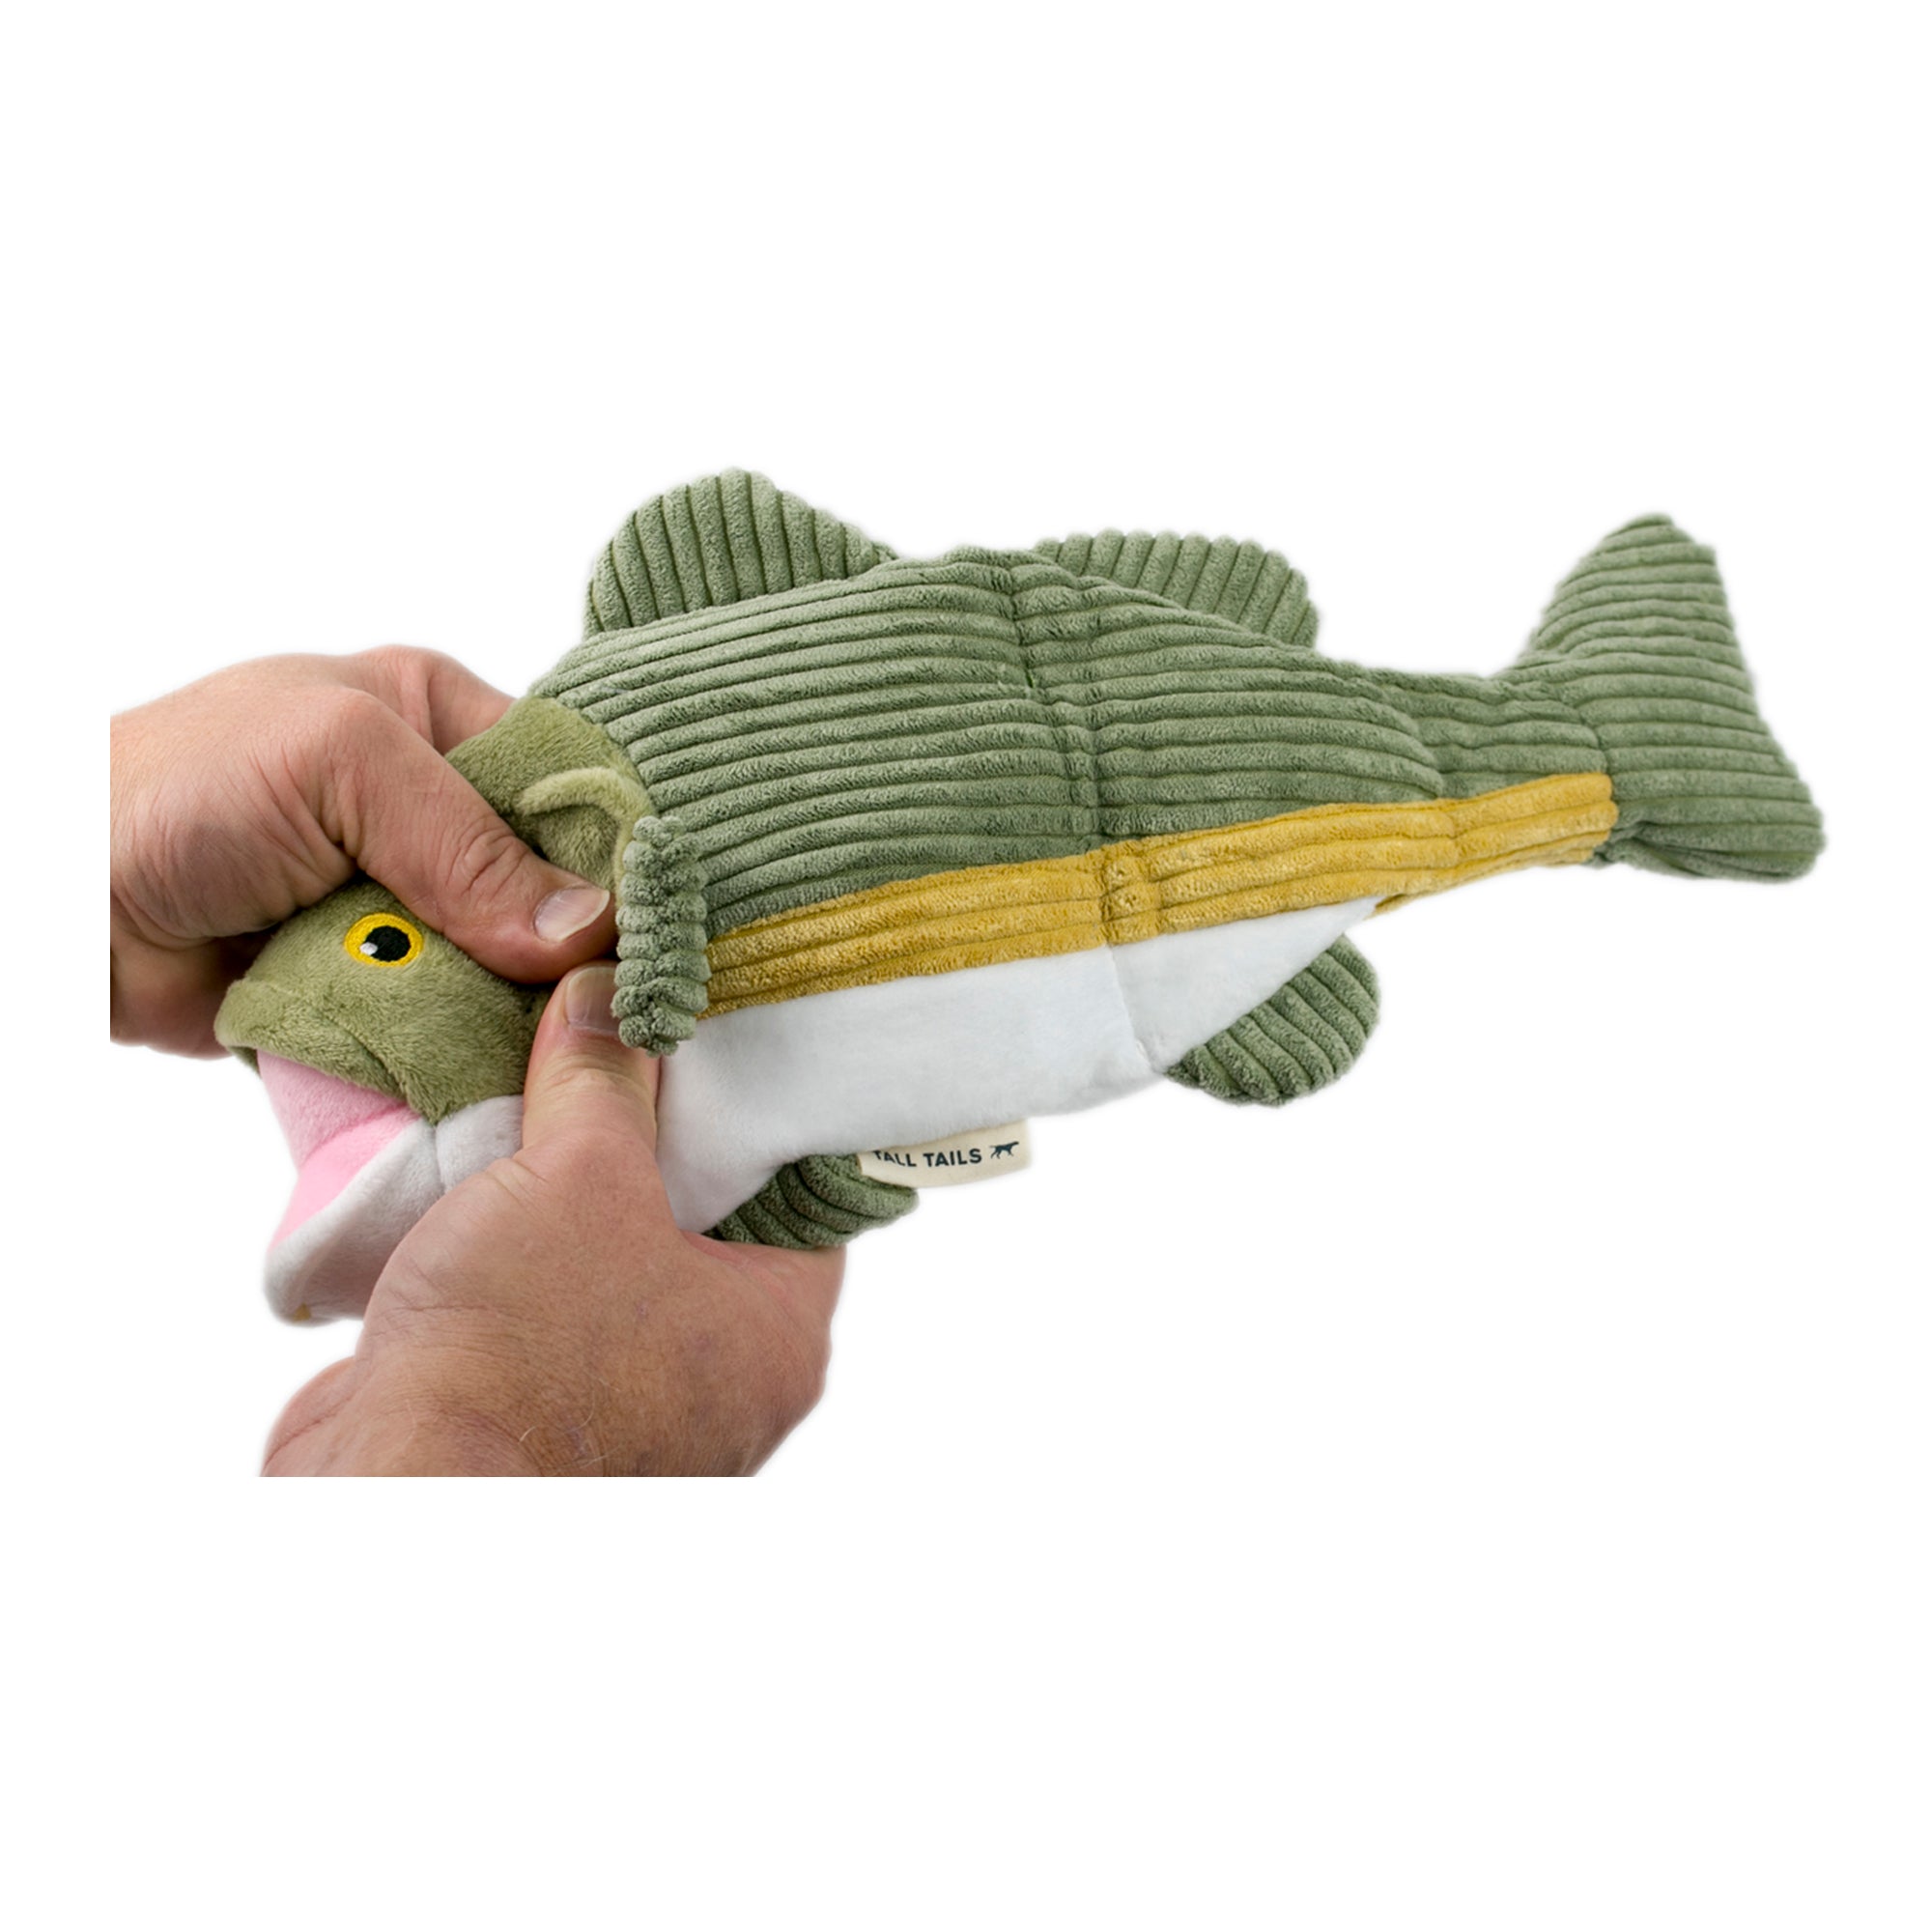 Squeaky Plush Dog Toy: Animated Bass